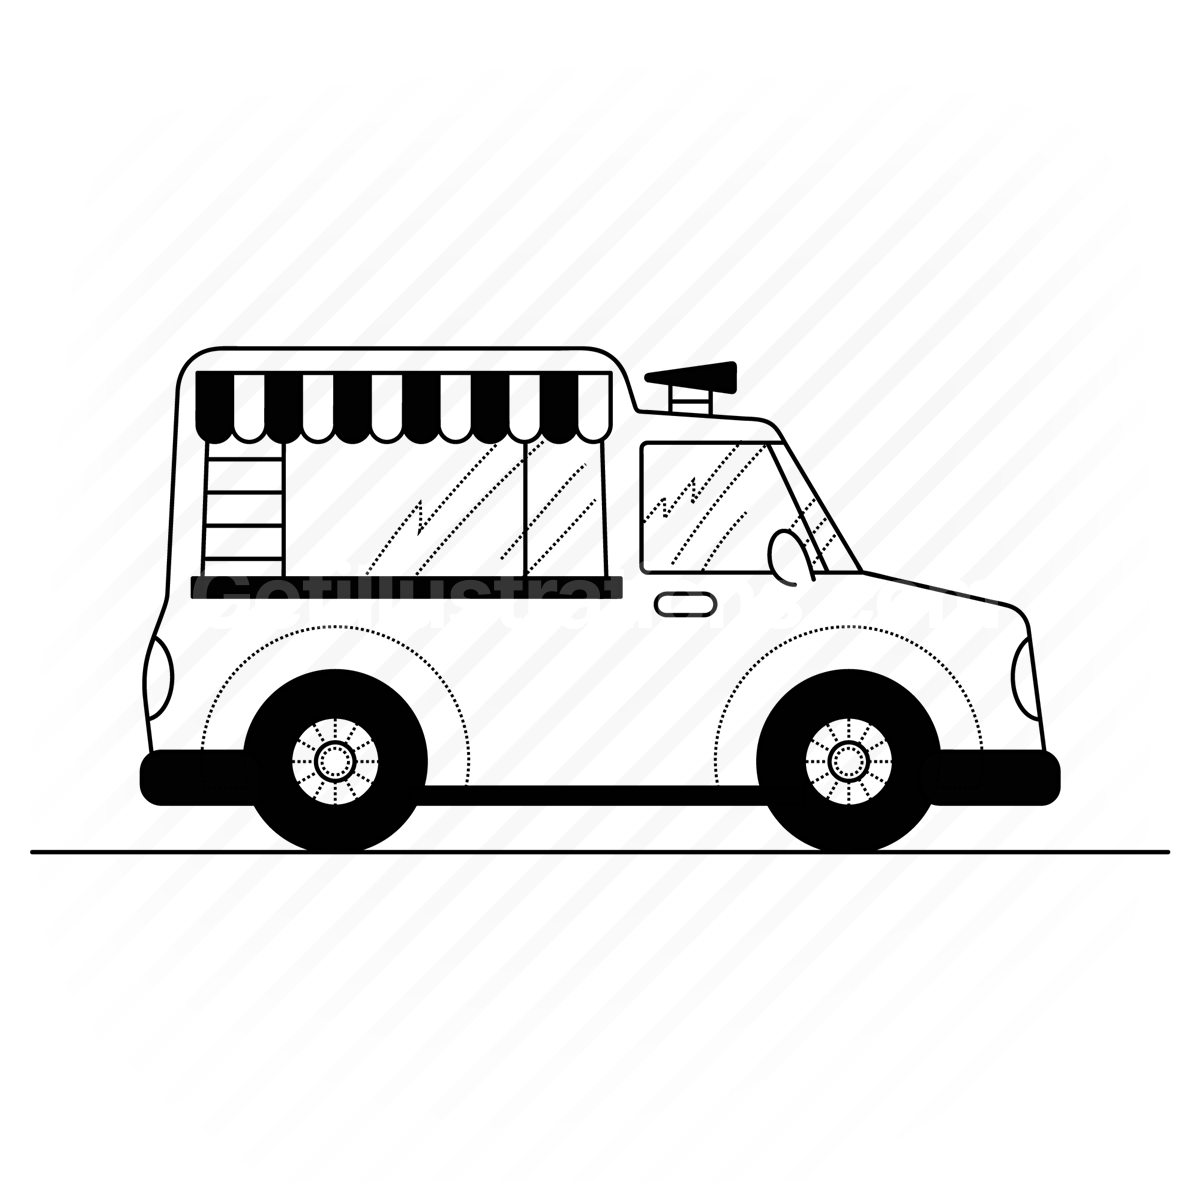 food truck, truck, van, vehicle, transport, meal, street vendor